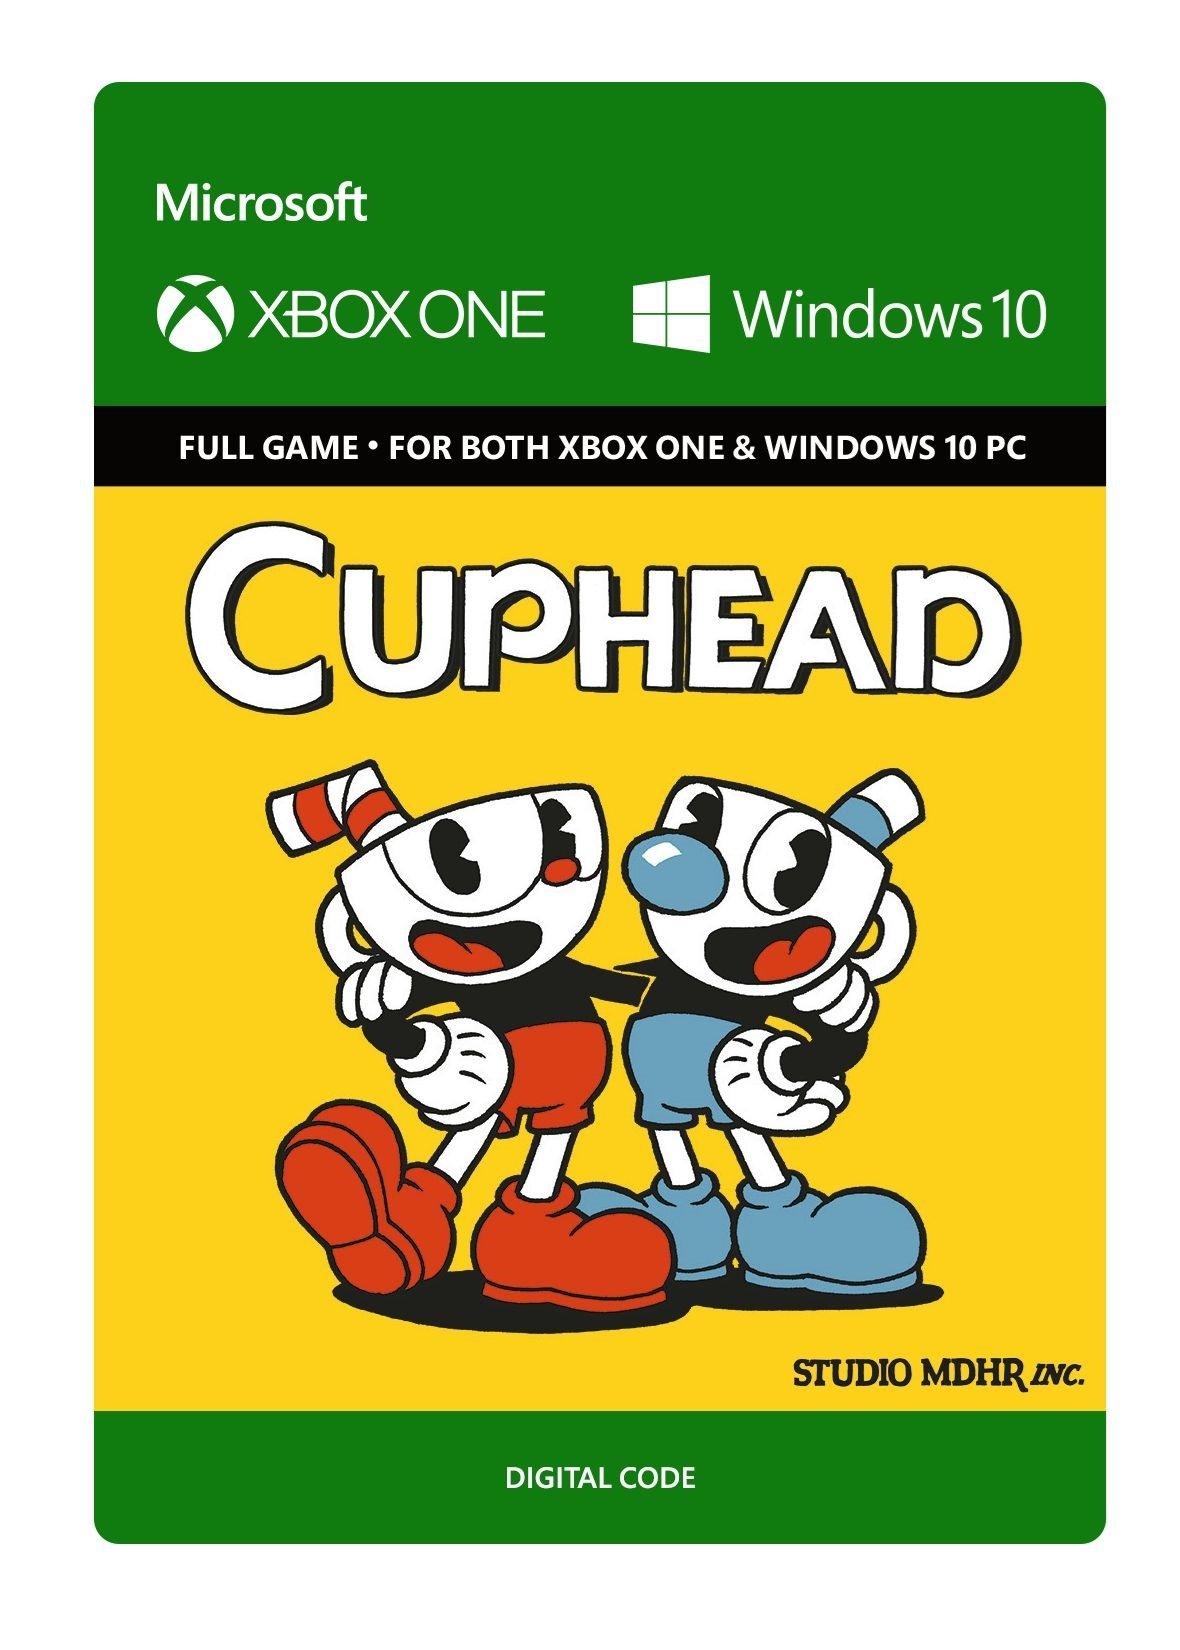 Cuphead - Xbox One and Win 10 - Full Game | 6JN-00007 (e7dd1e8f-784d-4507-ac43-c207d24d15da)